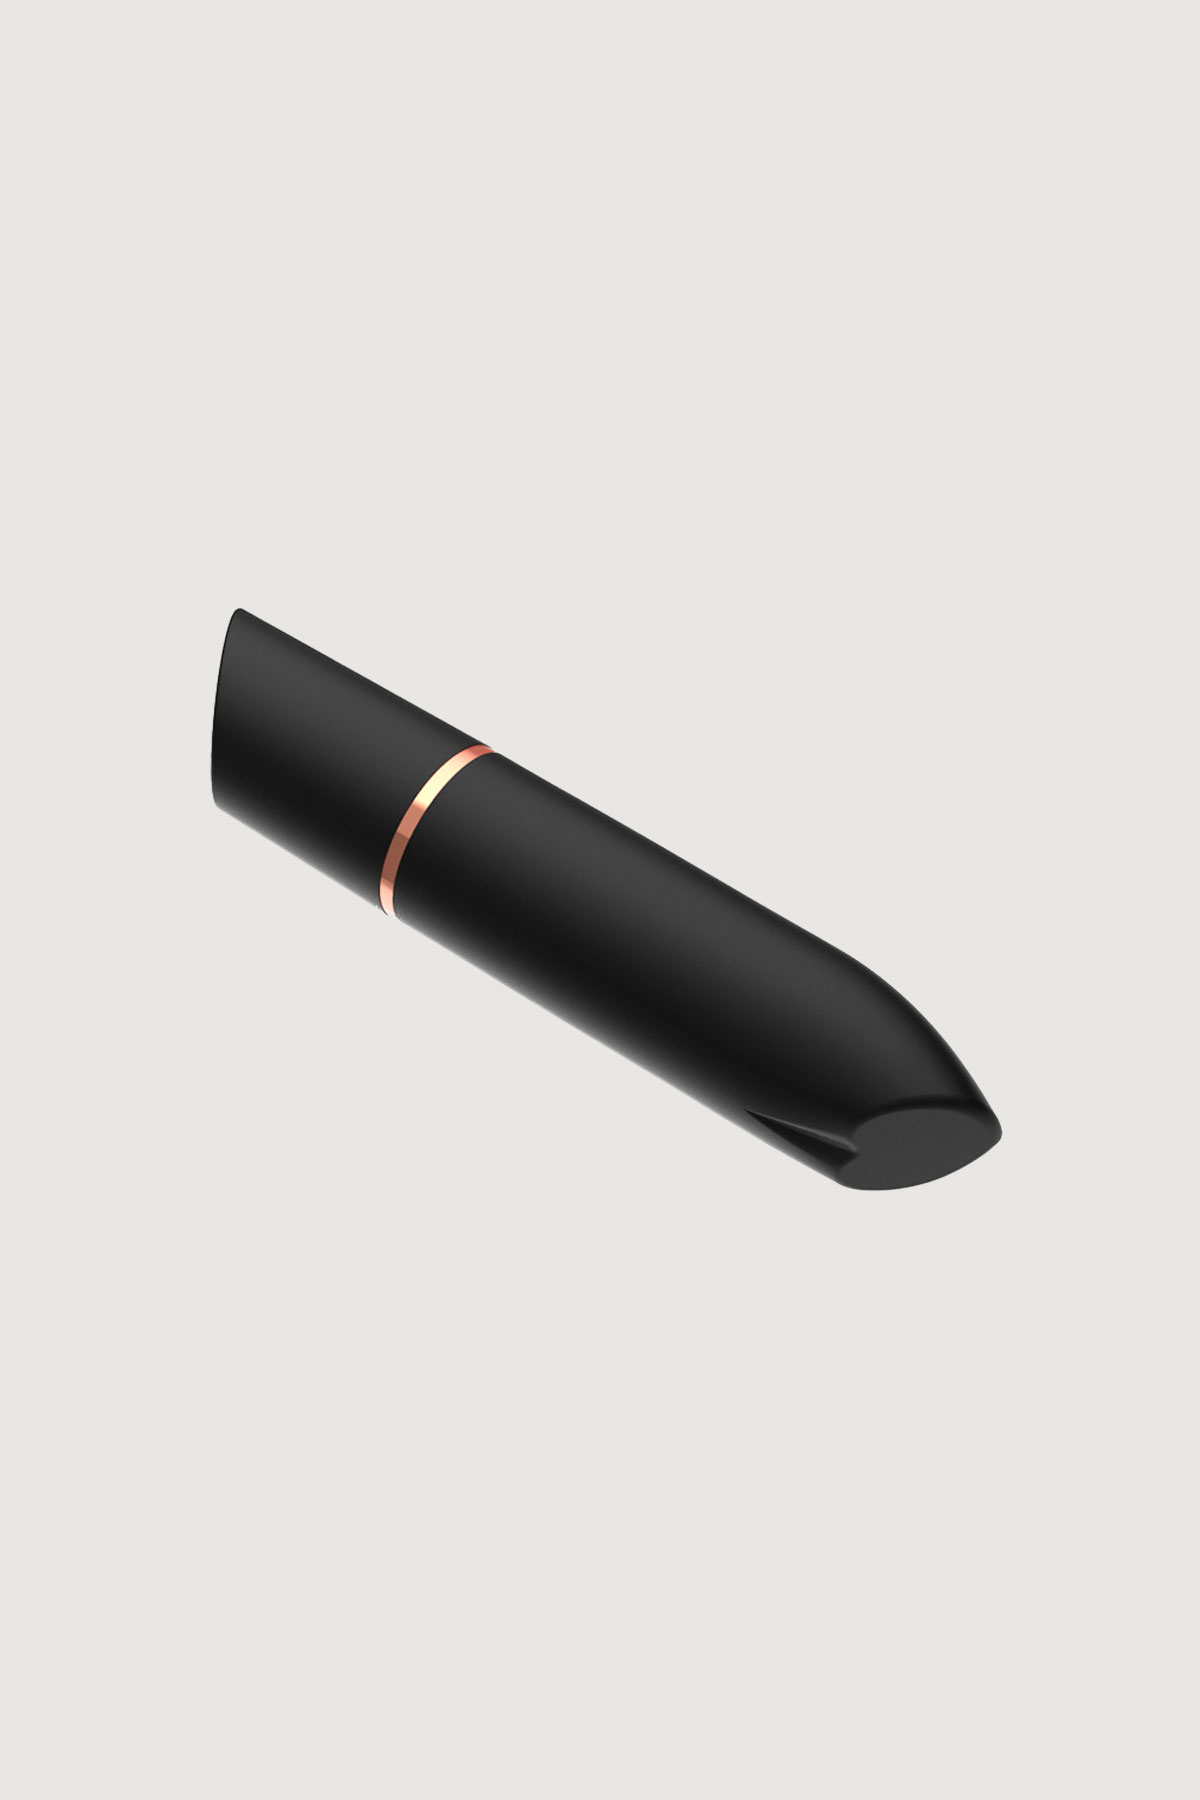 Balle vibrante rechargeable Rocket Adrien Lastic - adrienlastic